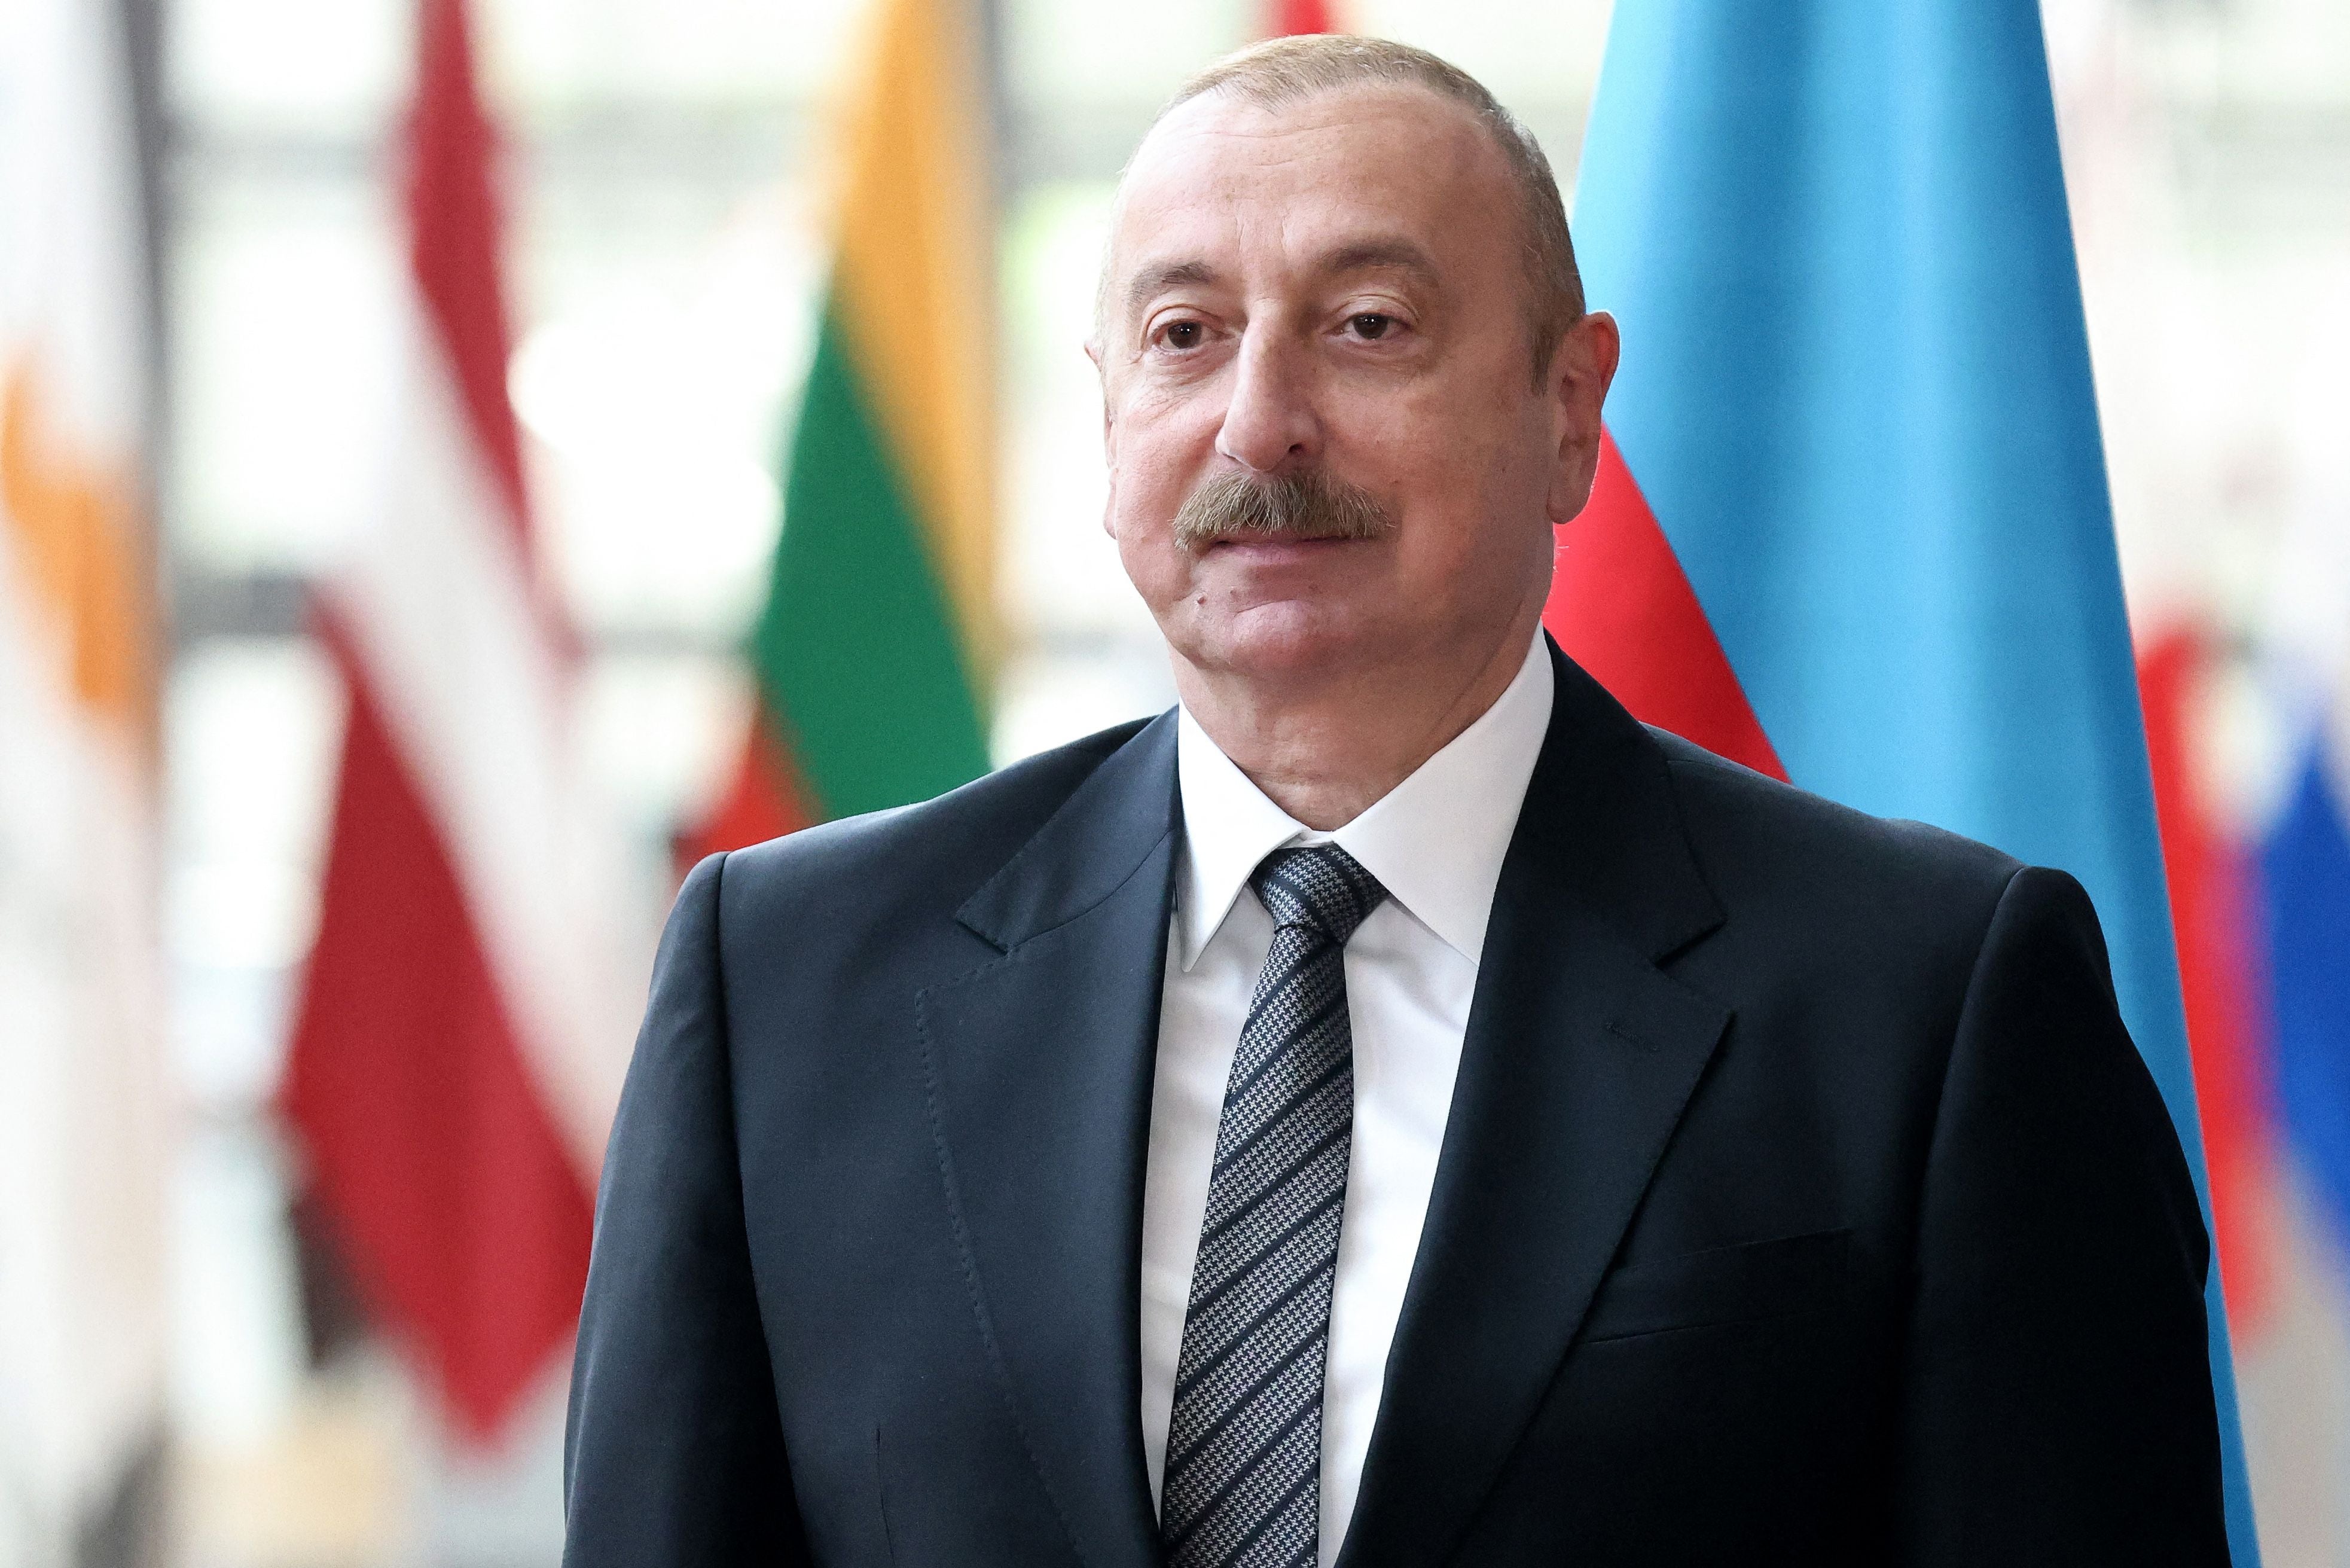 Azerbaijan's president Ilham Aliyev